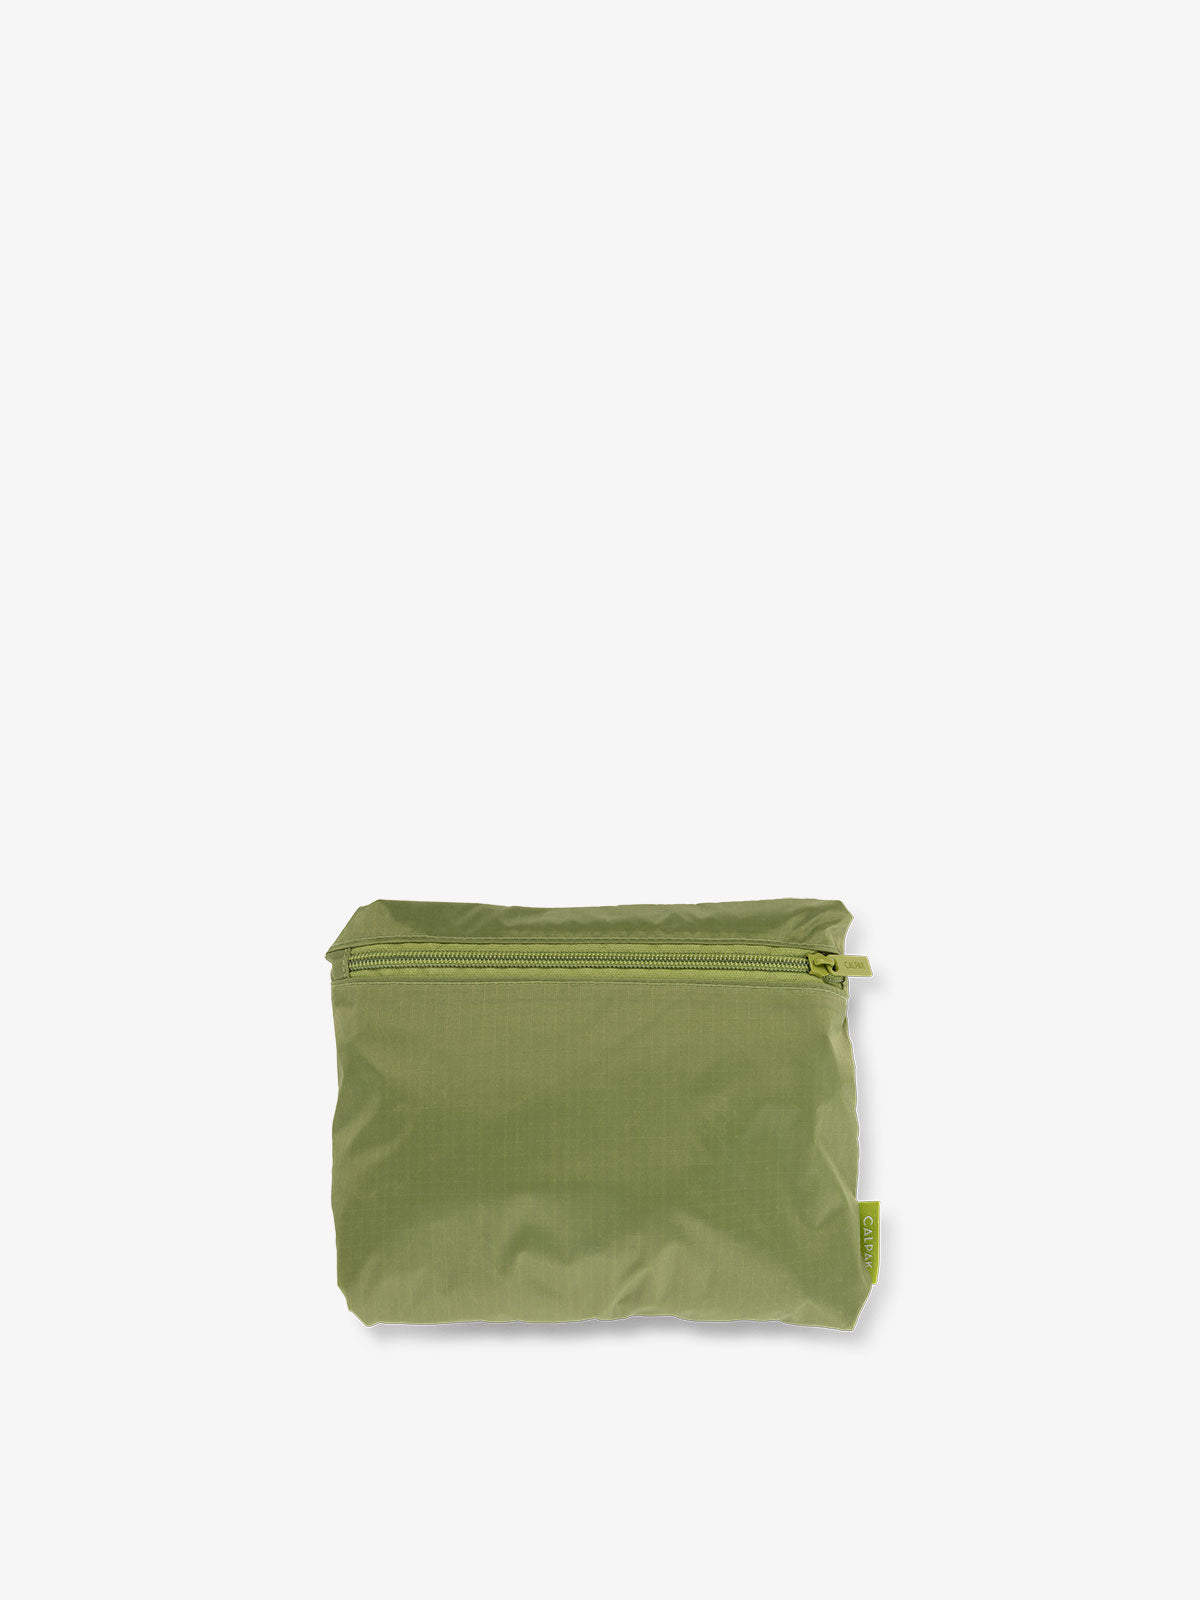 CALPAK Compakt foldable duffle bag for travel in palm green